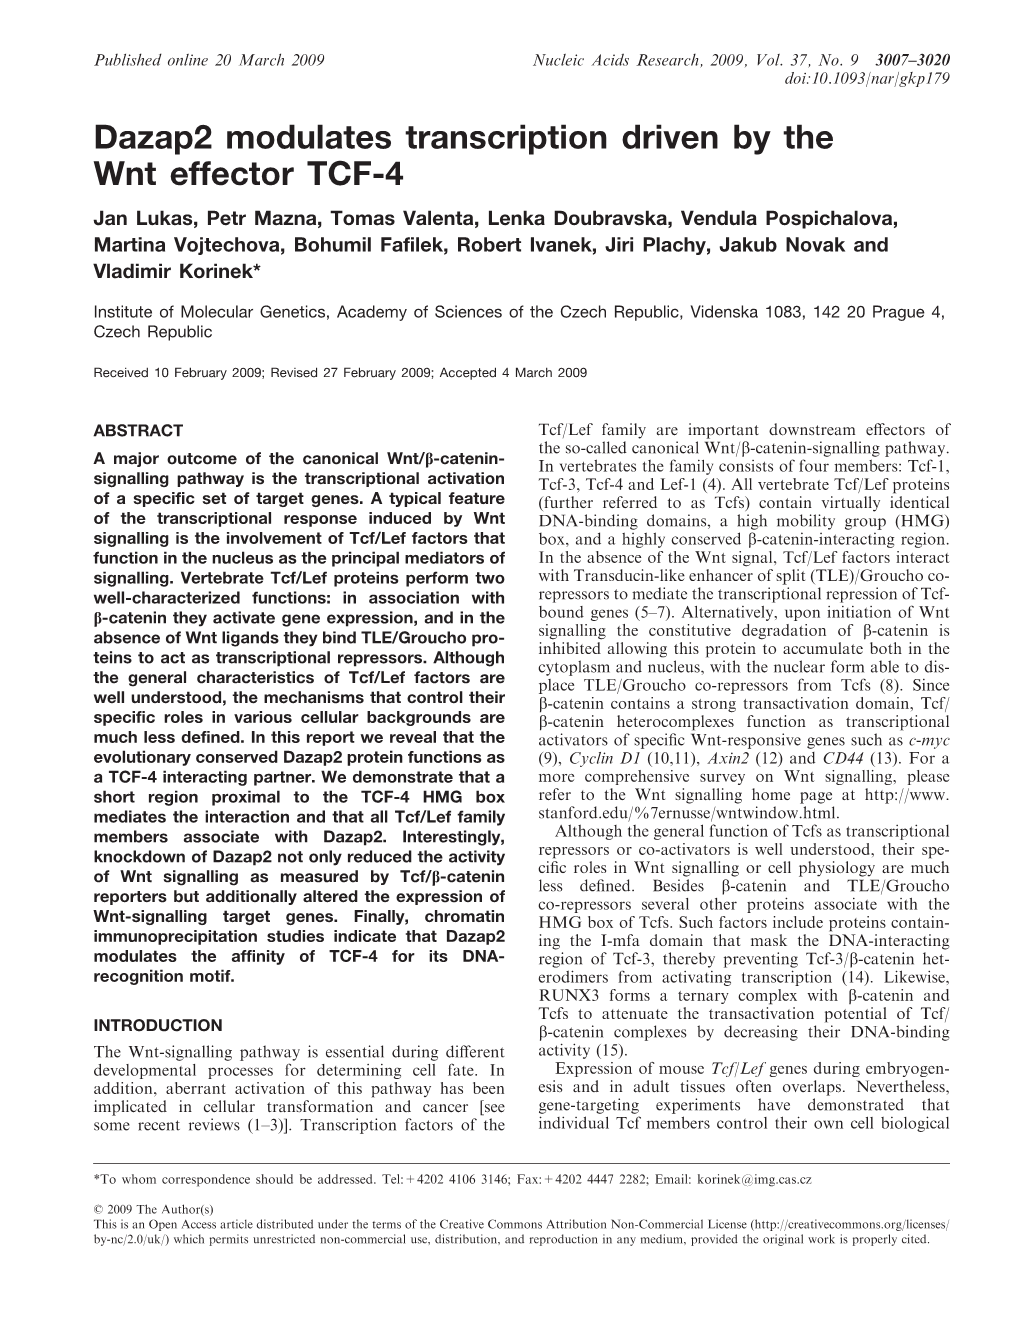 Dazap2 Modulates Transcription Driven by the Wnt Effector TCF-4